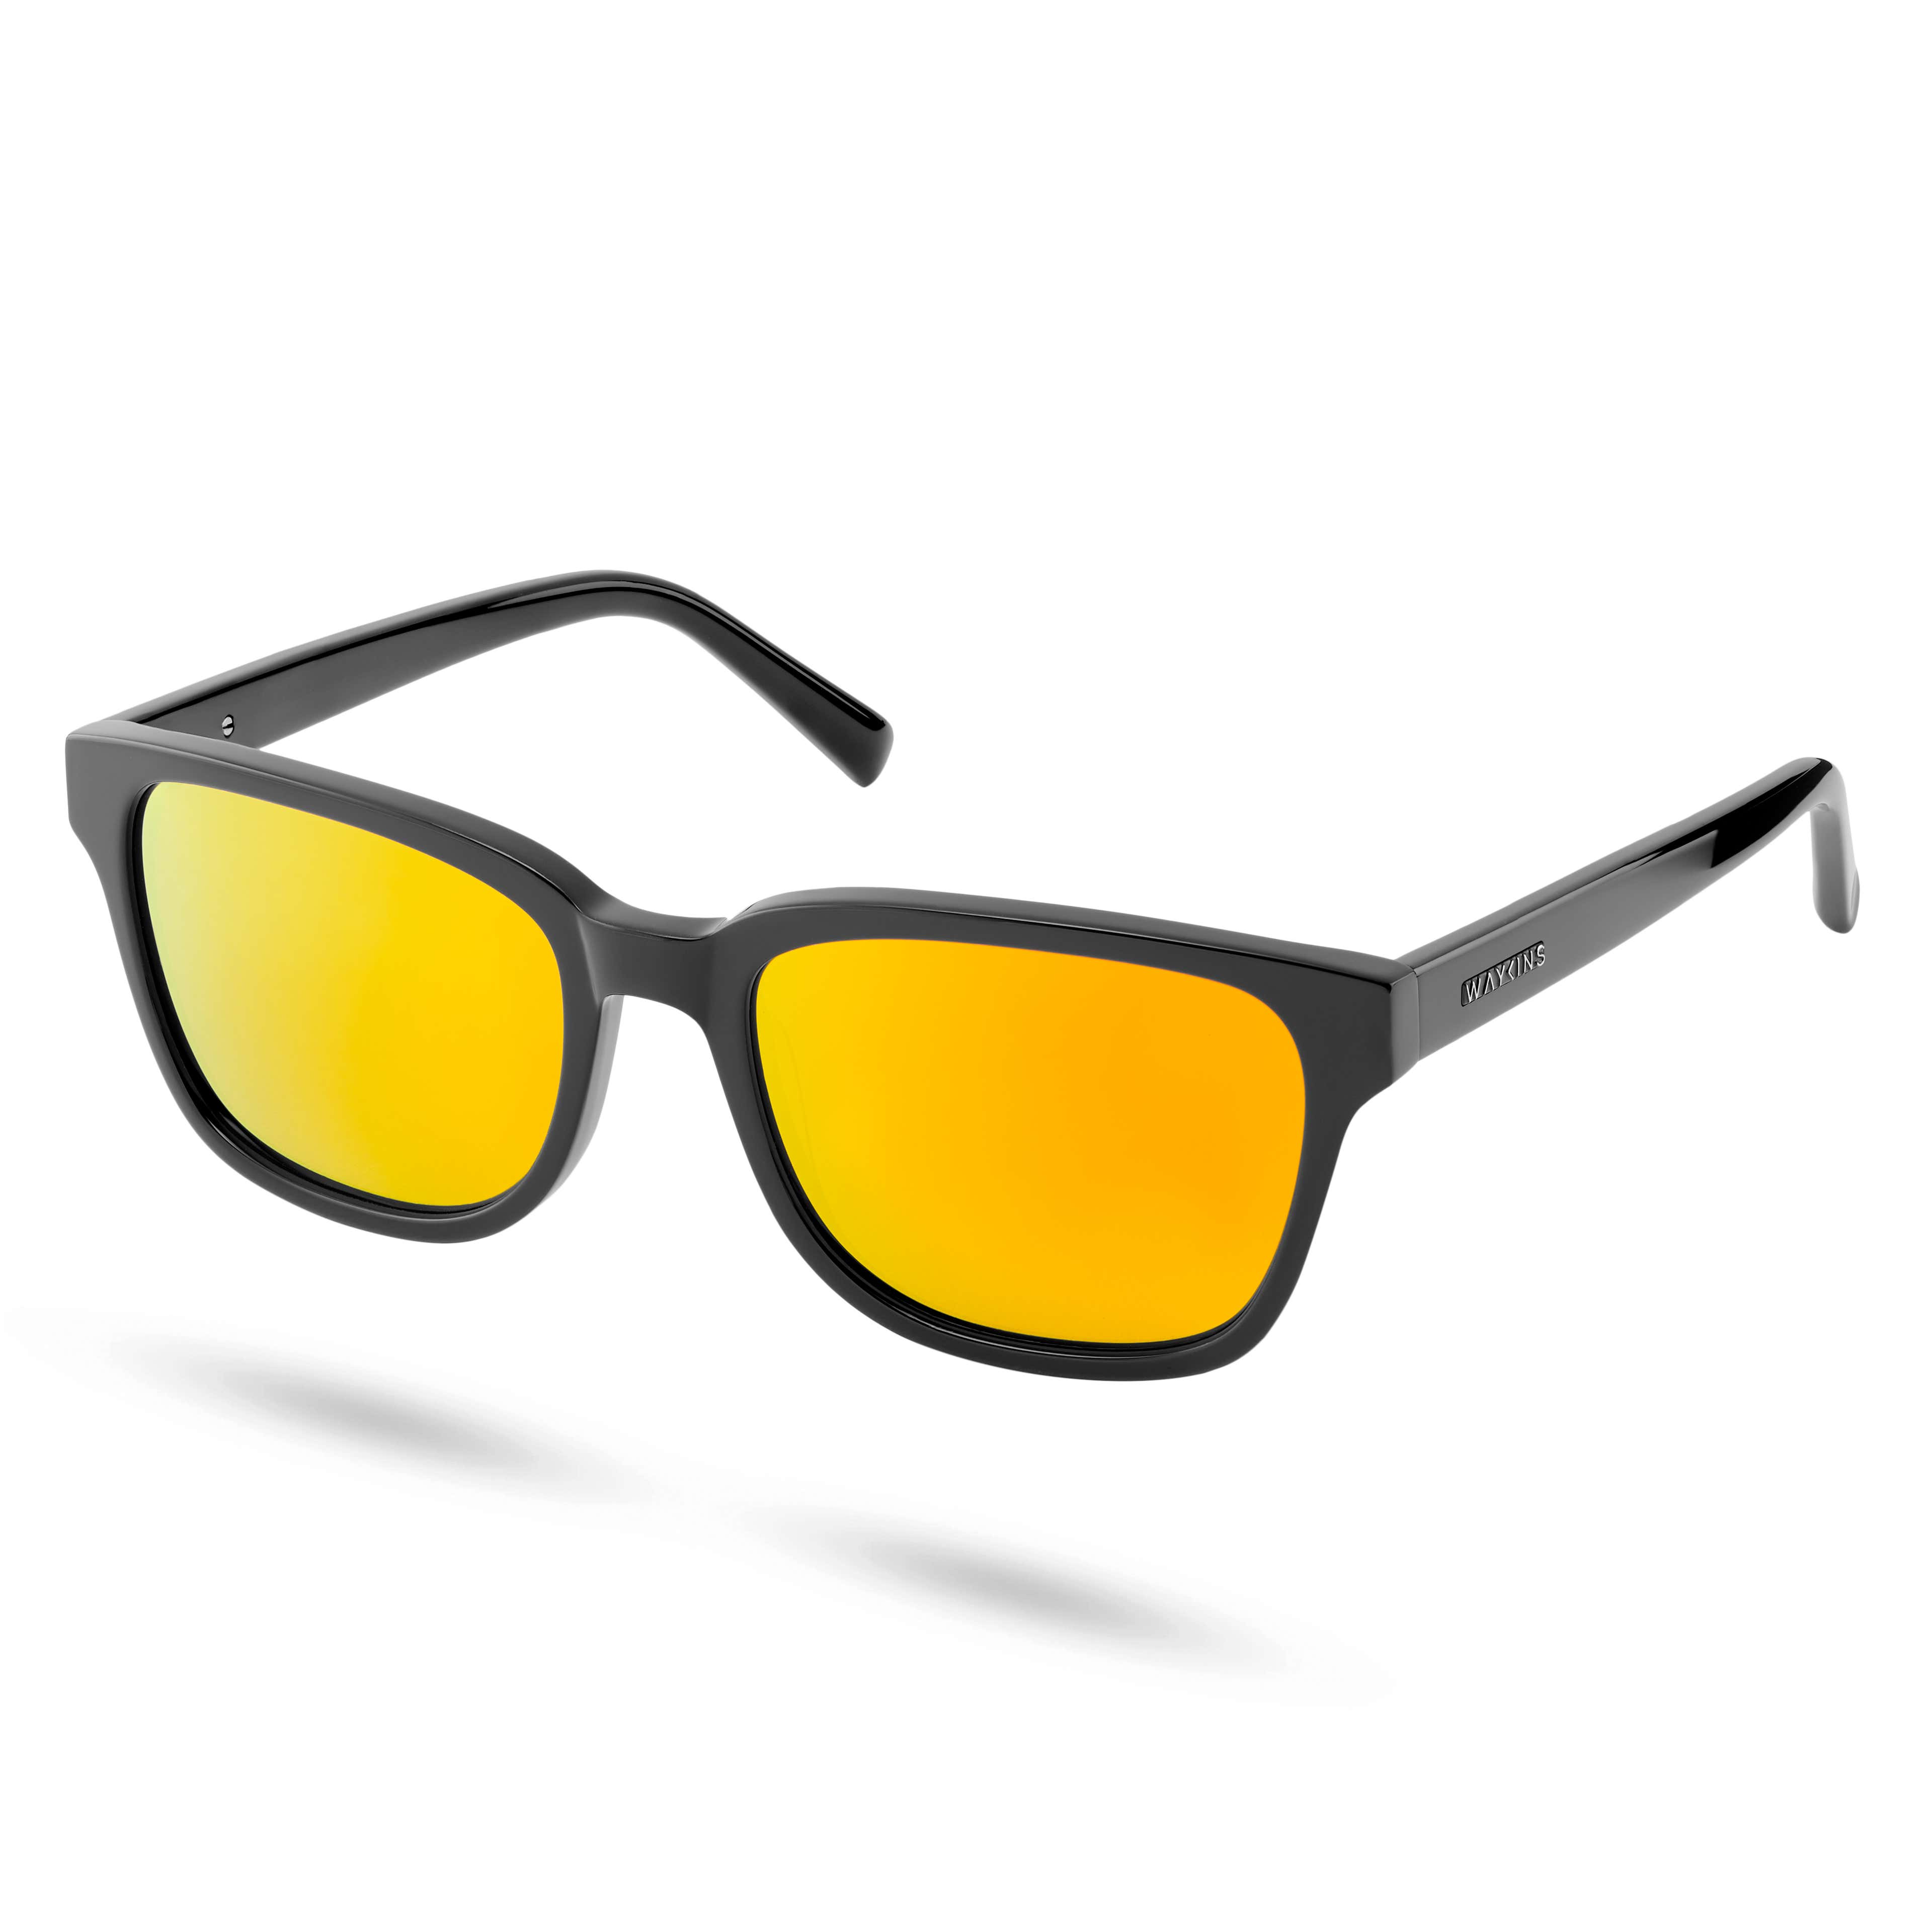 Wilmer Thea Black & Yellow-Orange Mirror Polarized Sunglasses